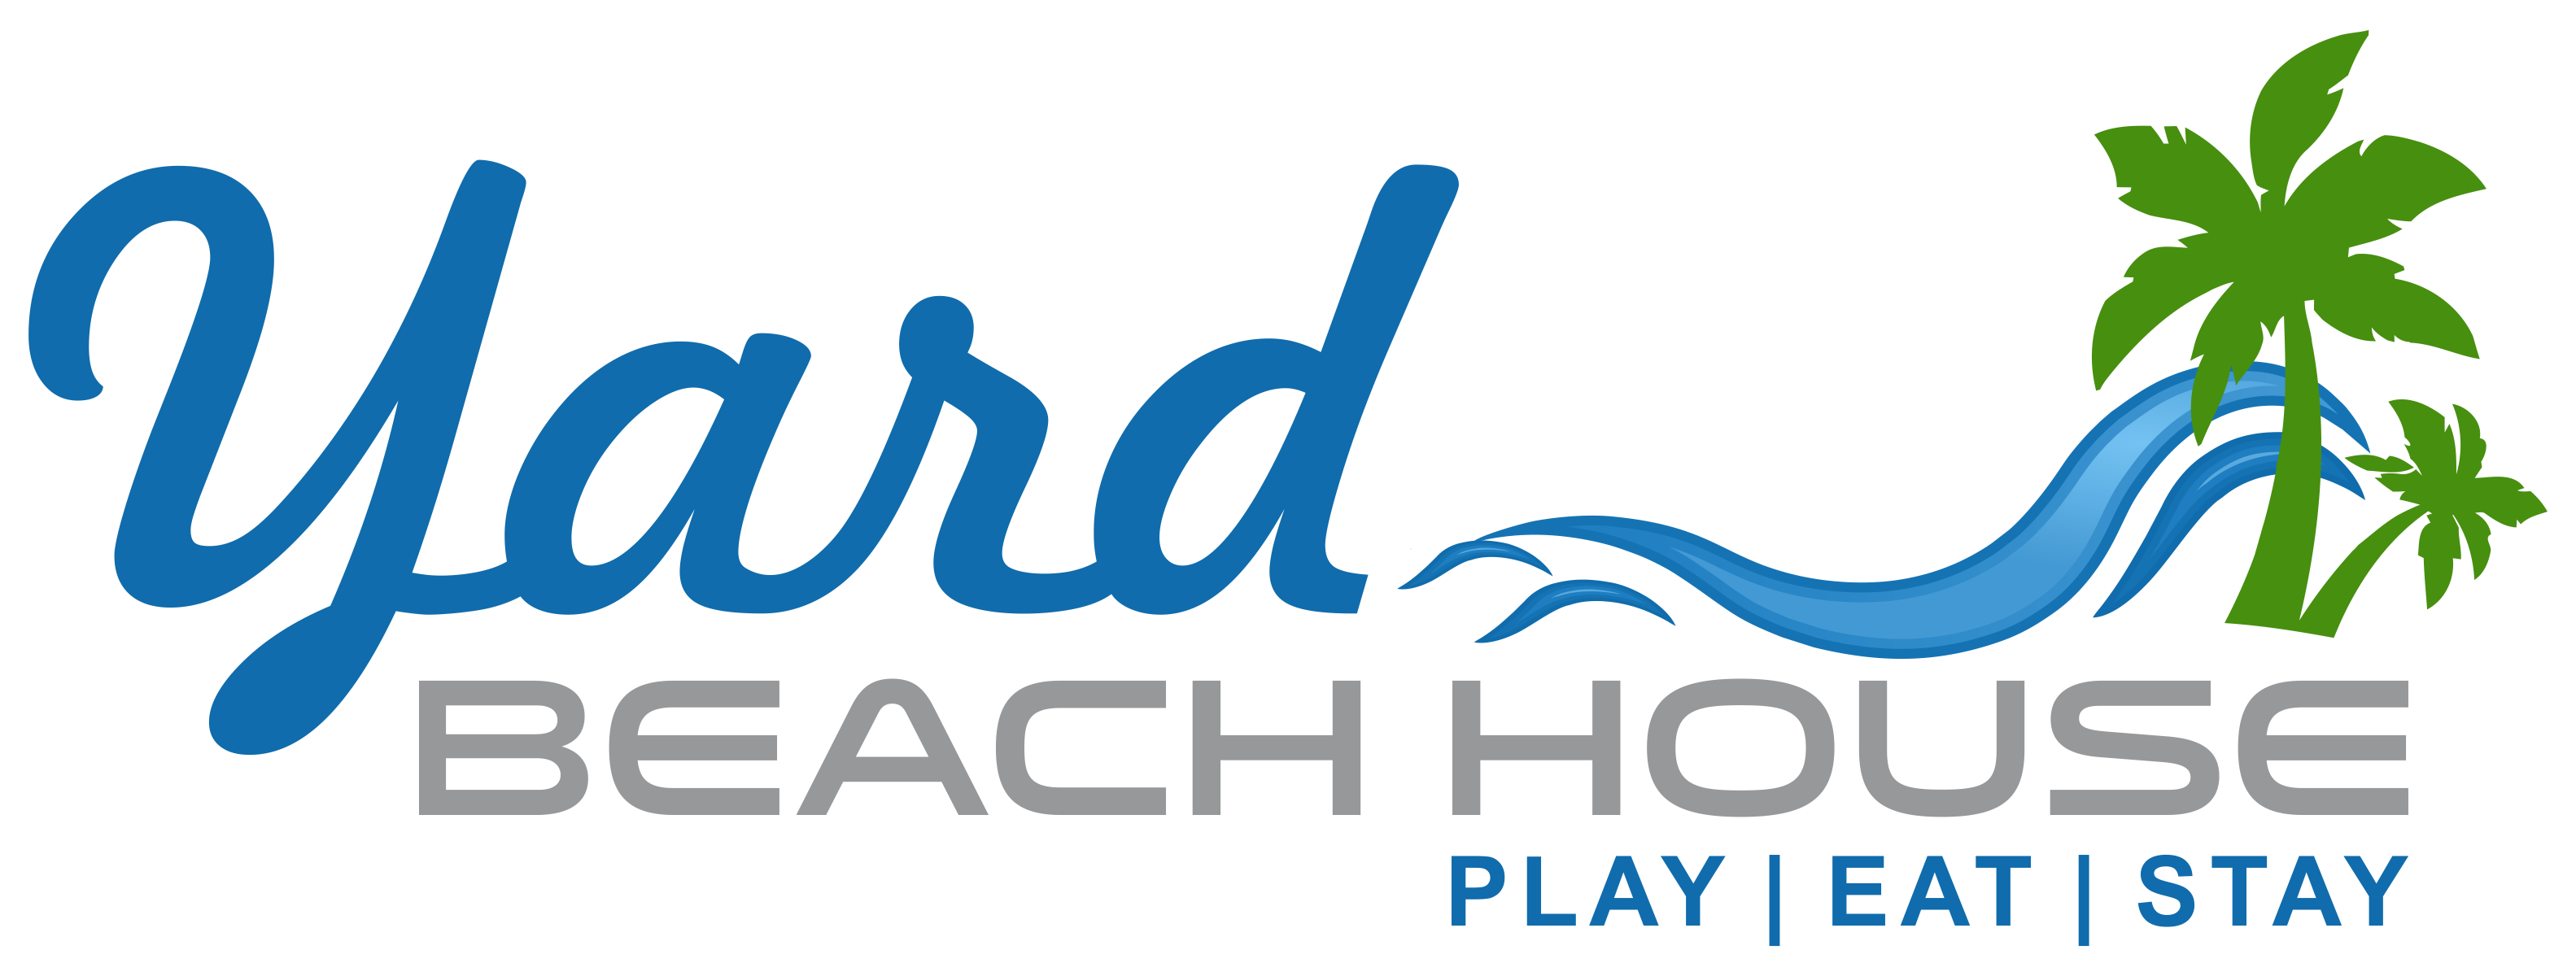 Yard Beach House 